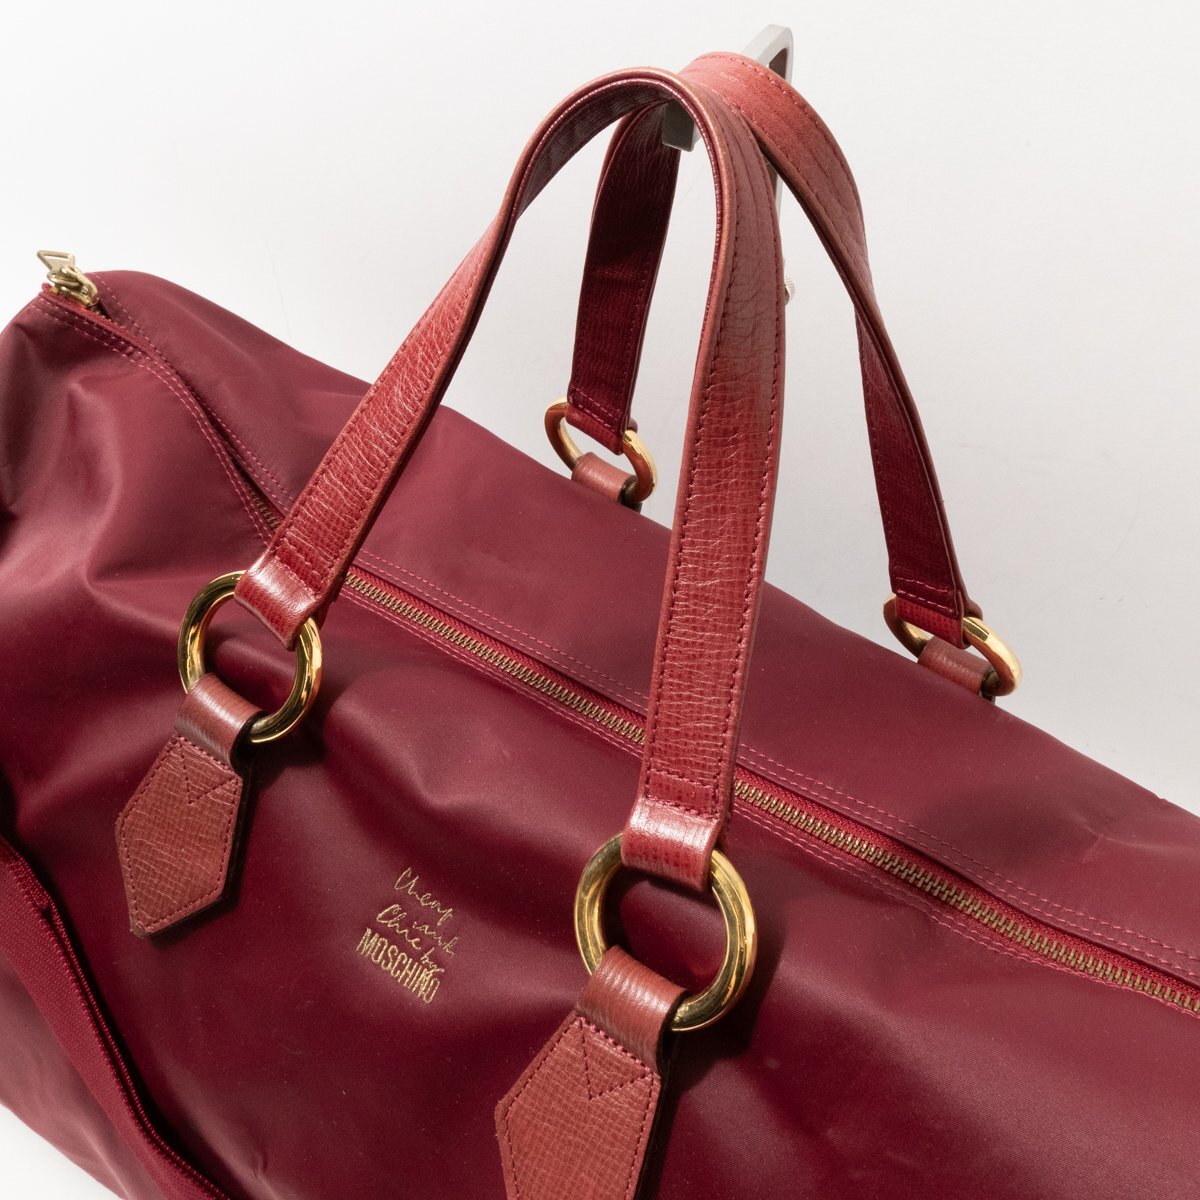 MOSCHINO Moschino Boston bag bordeaux Gold nylon leather lady's diagonal .. hand .. high capacity travel casual bag bag 